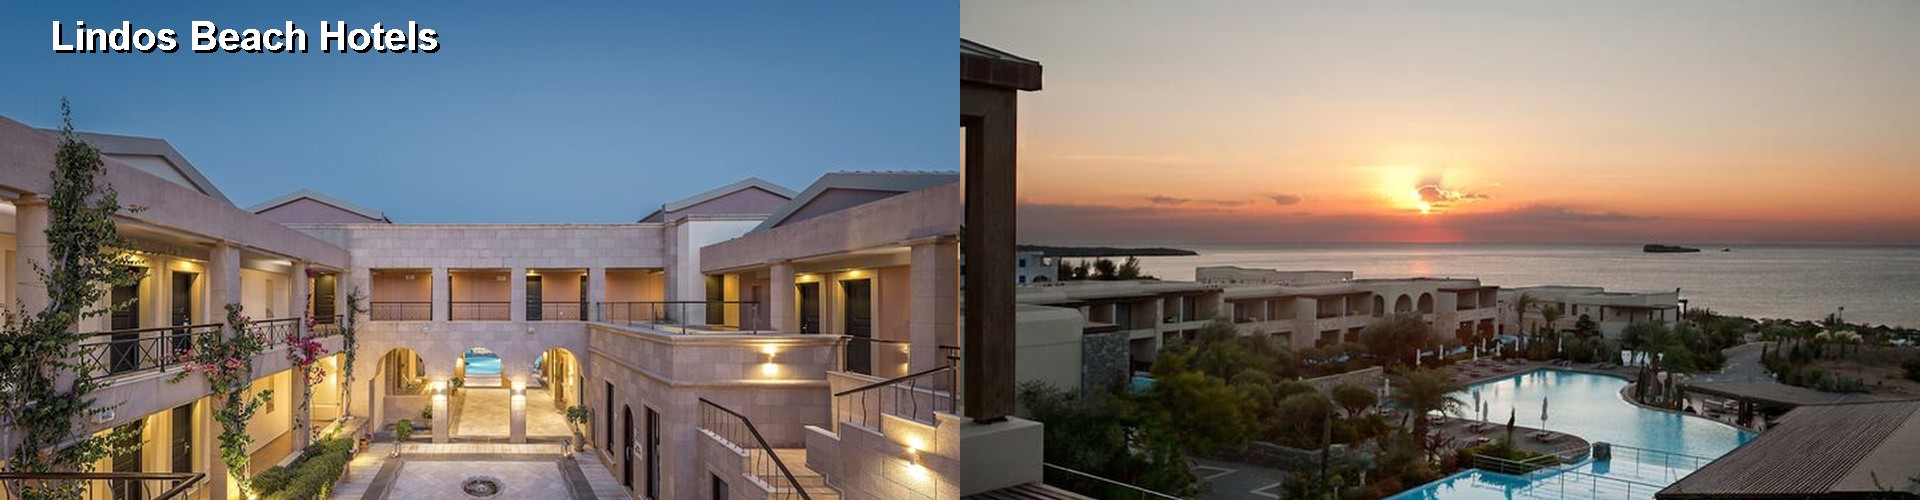 5 Best Hotels near Lindos Beach